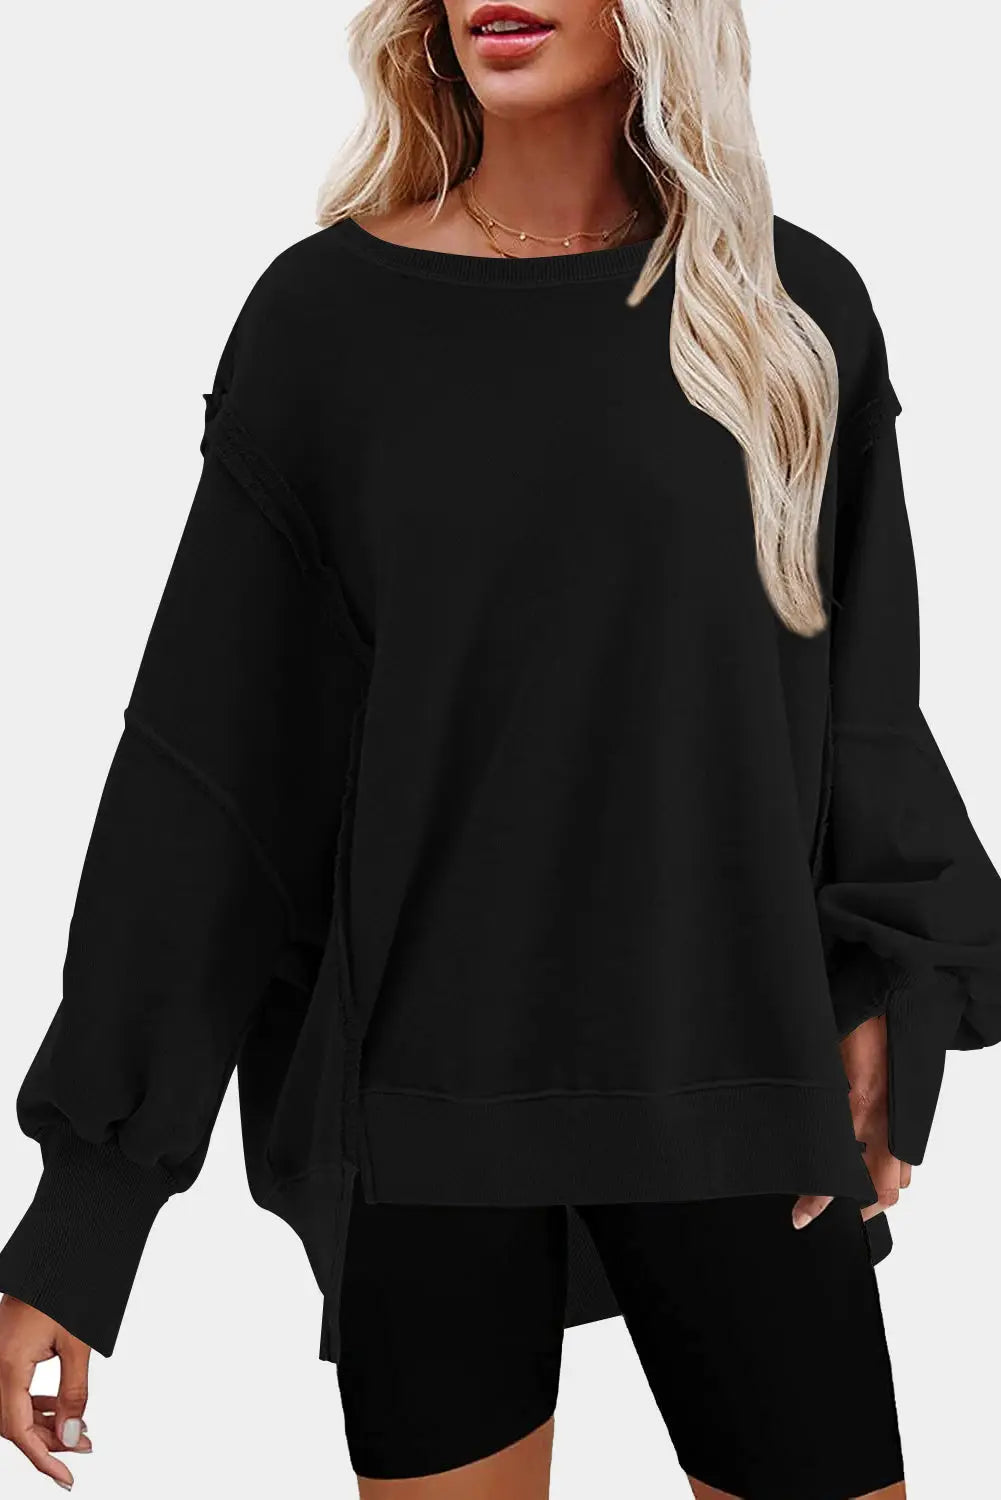 Black exposed seam drop shoulder slit high low hem sweatshirt - 2xl / 80% cotton + 20% polyester - sweatshits & hoodies